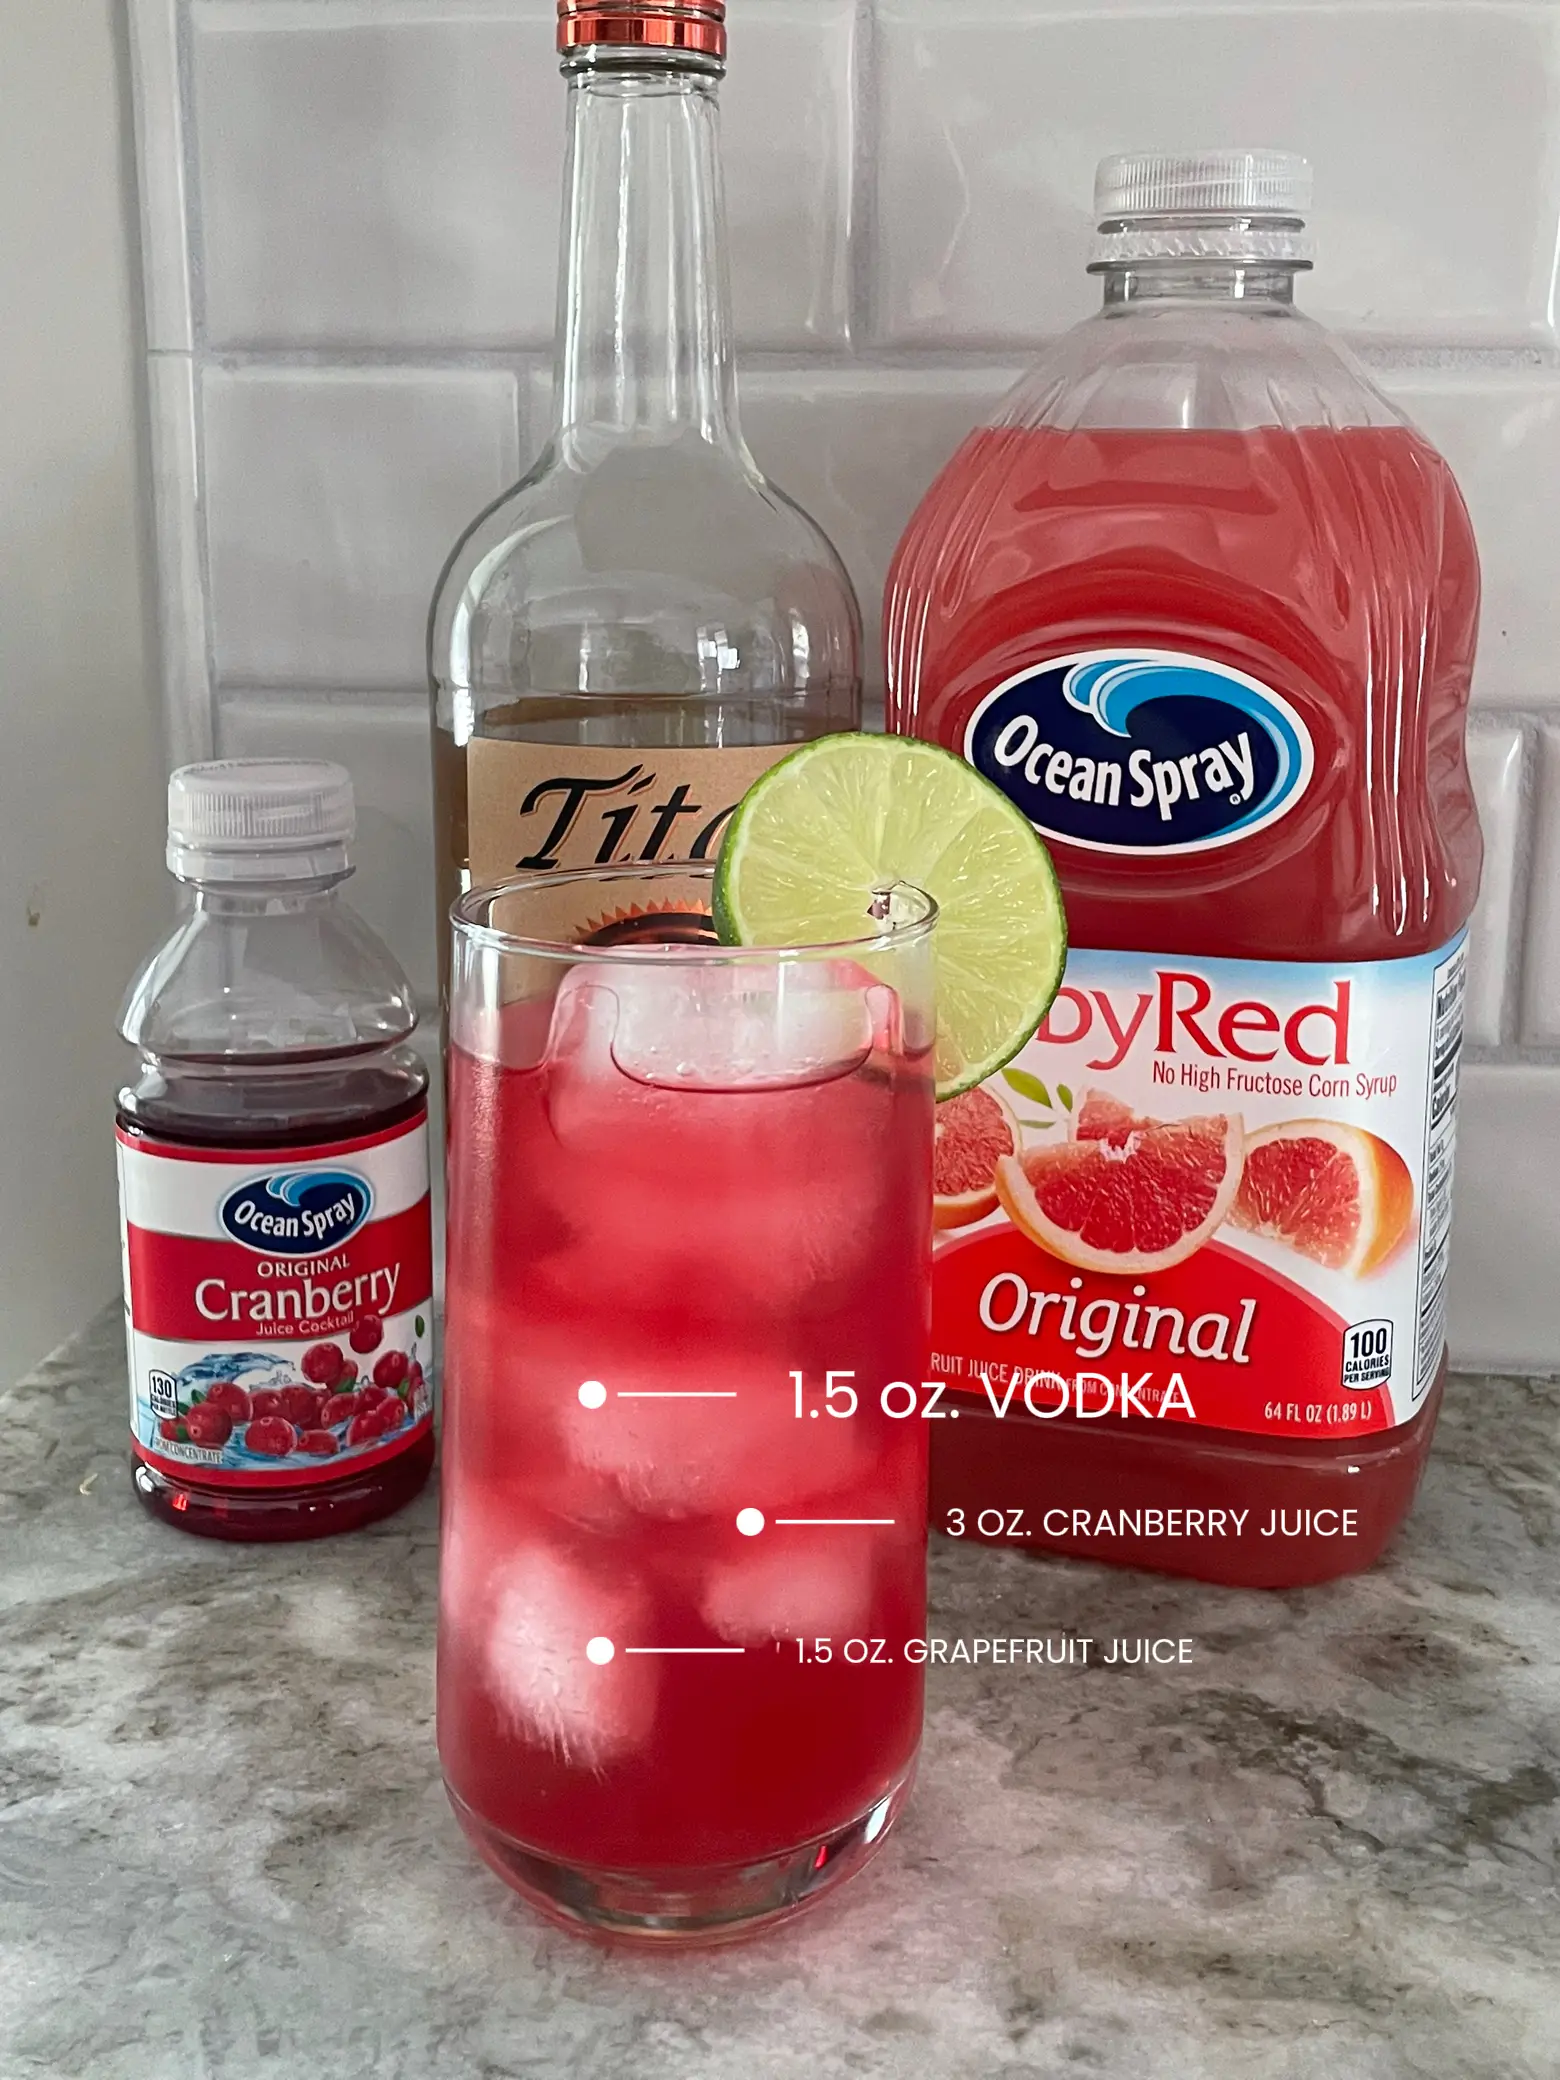  A bottle of vodka, a bottle of cranberry juice, and a bottle of grapefruit juice